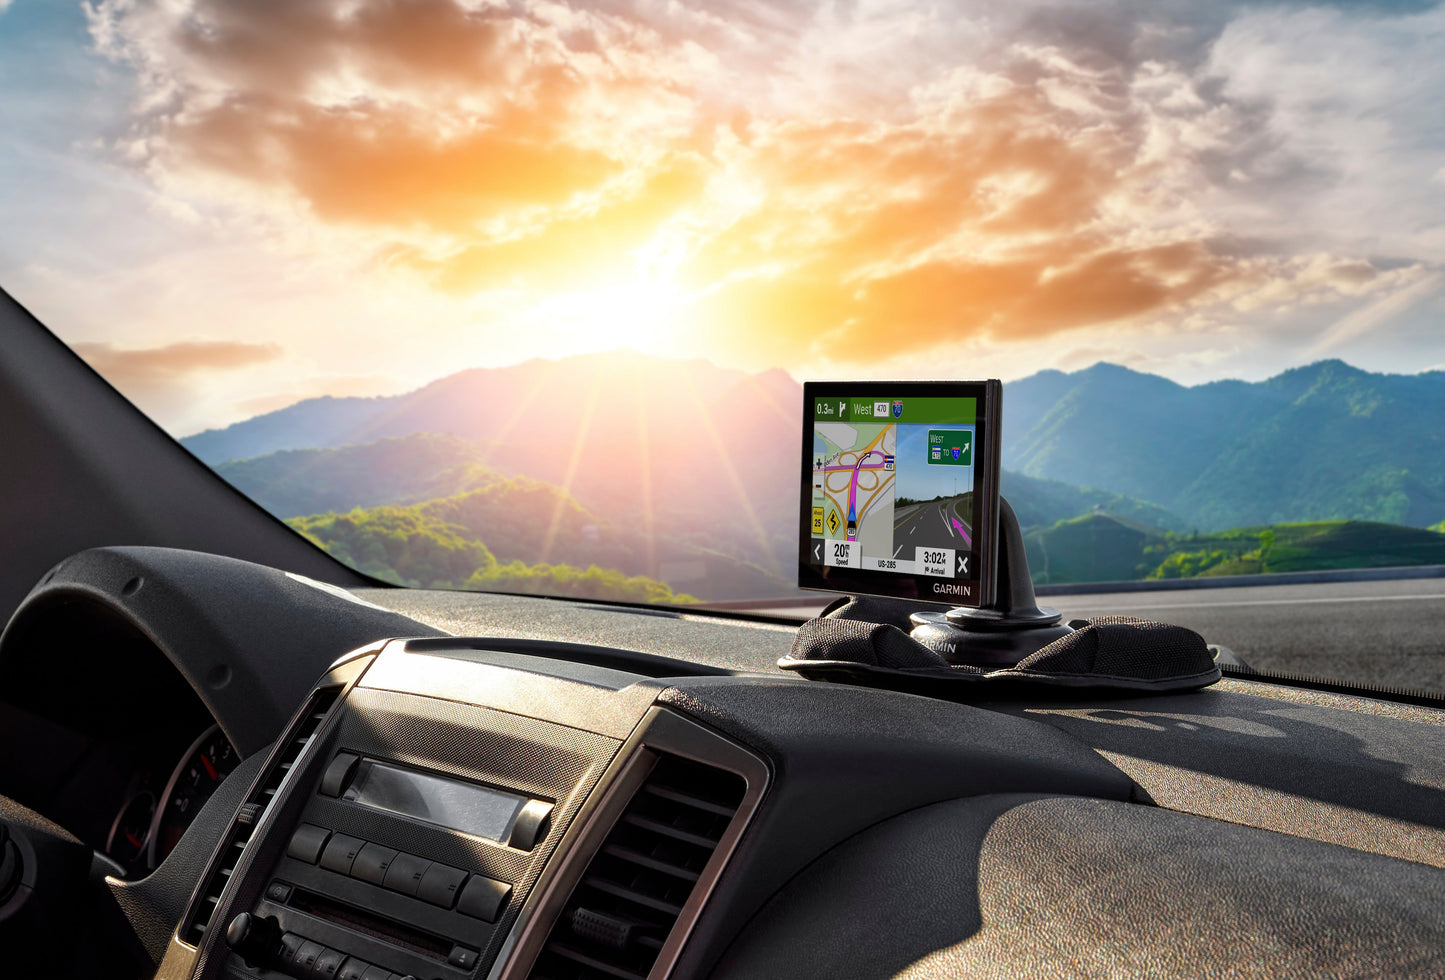 Garmin Drive 53 & Traffic GPS System (010-02858-01) - KBM Outdoors